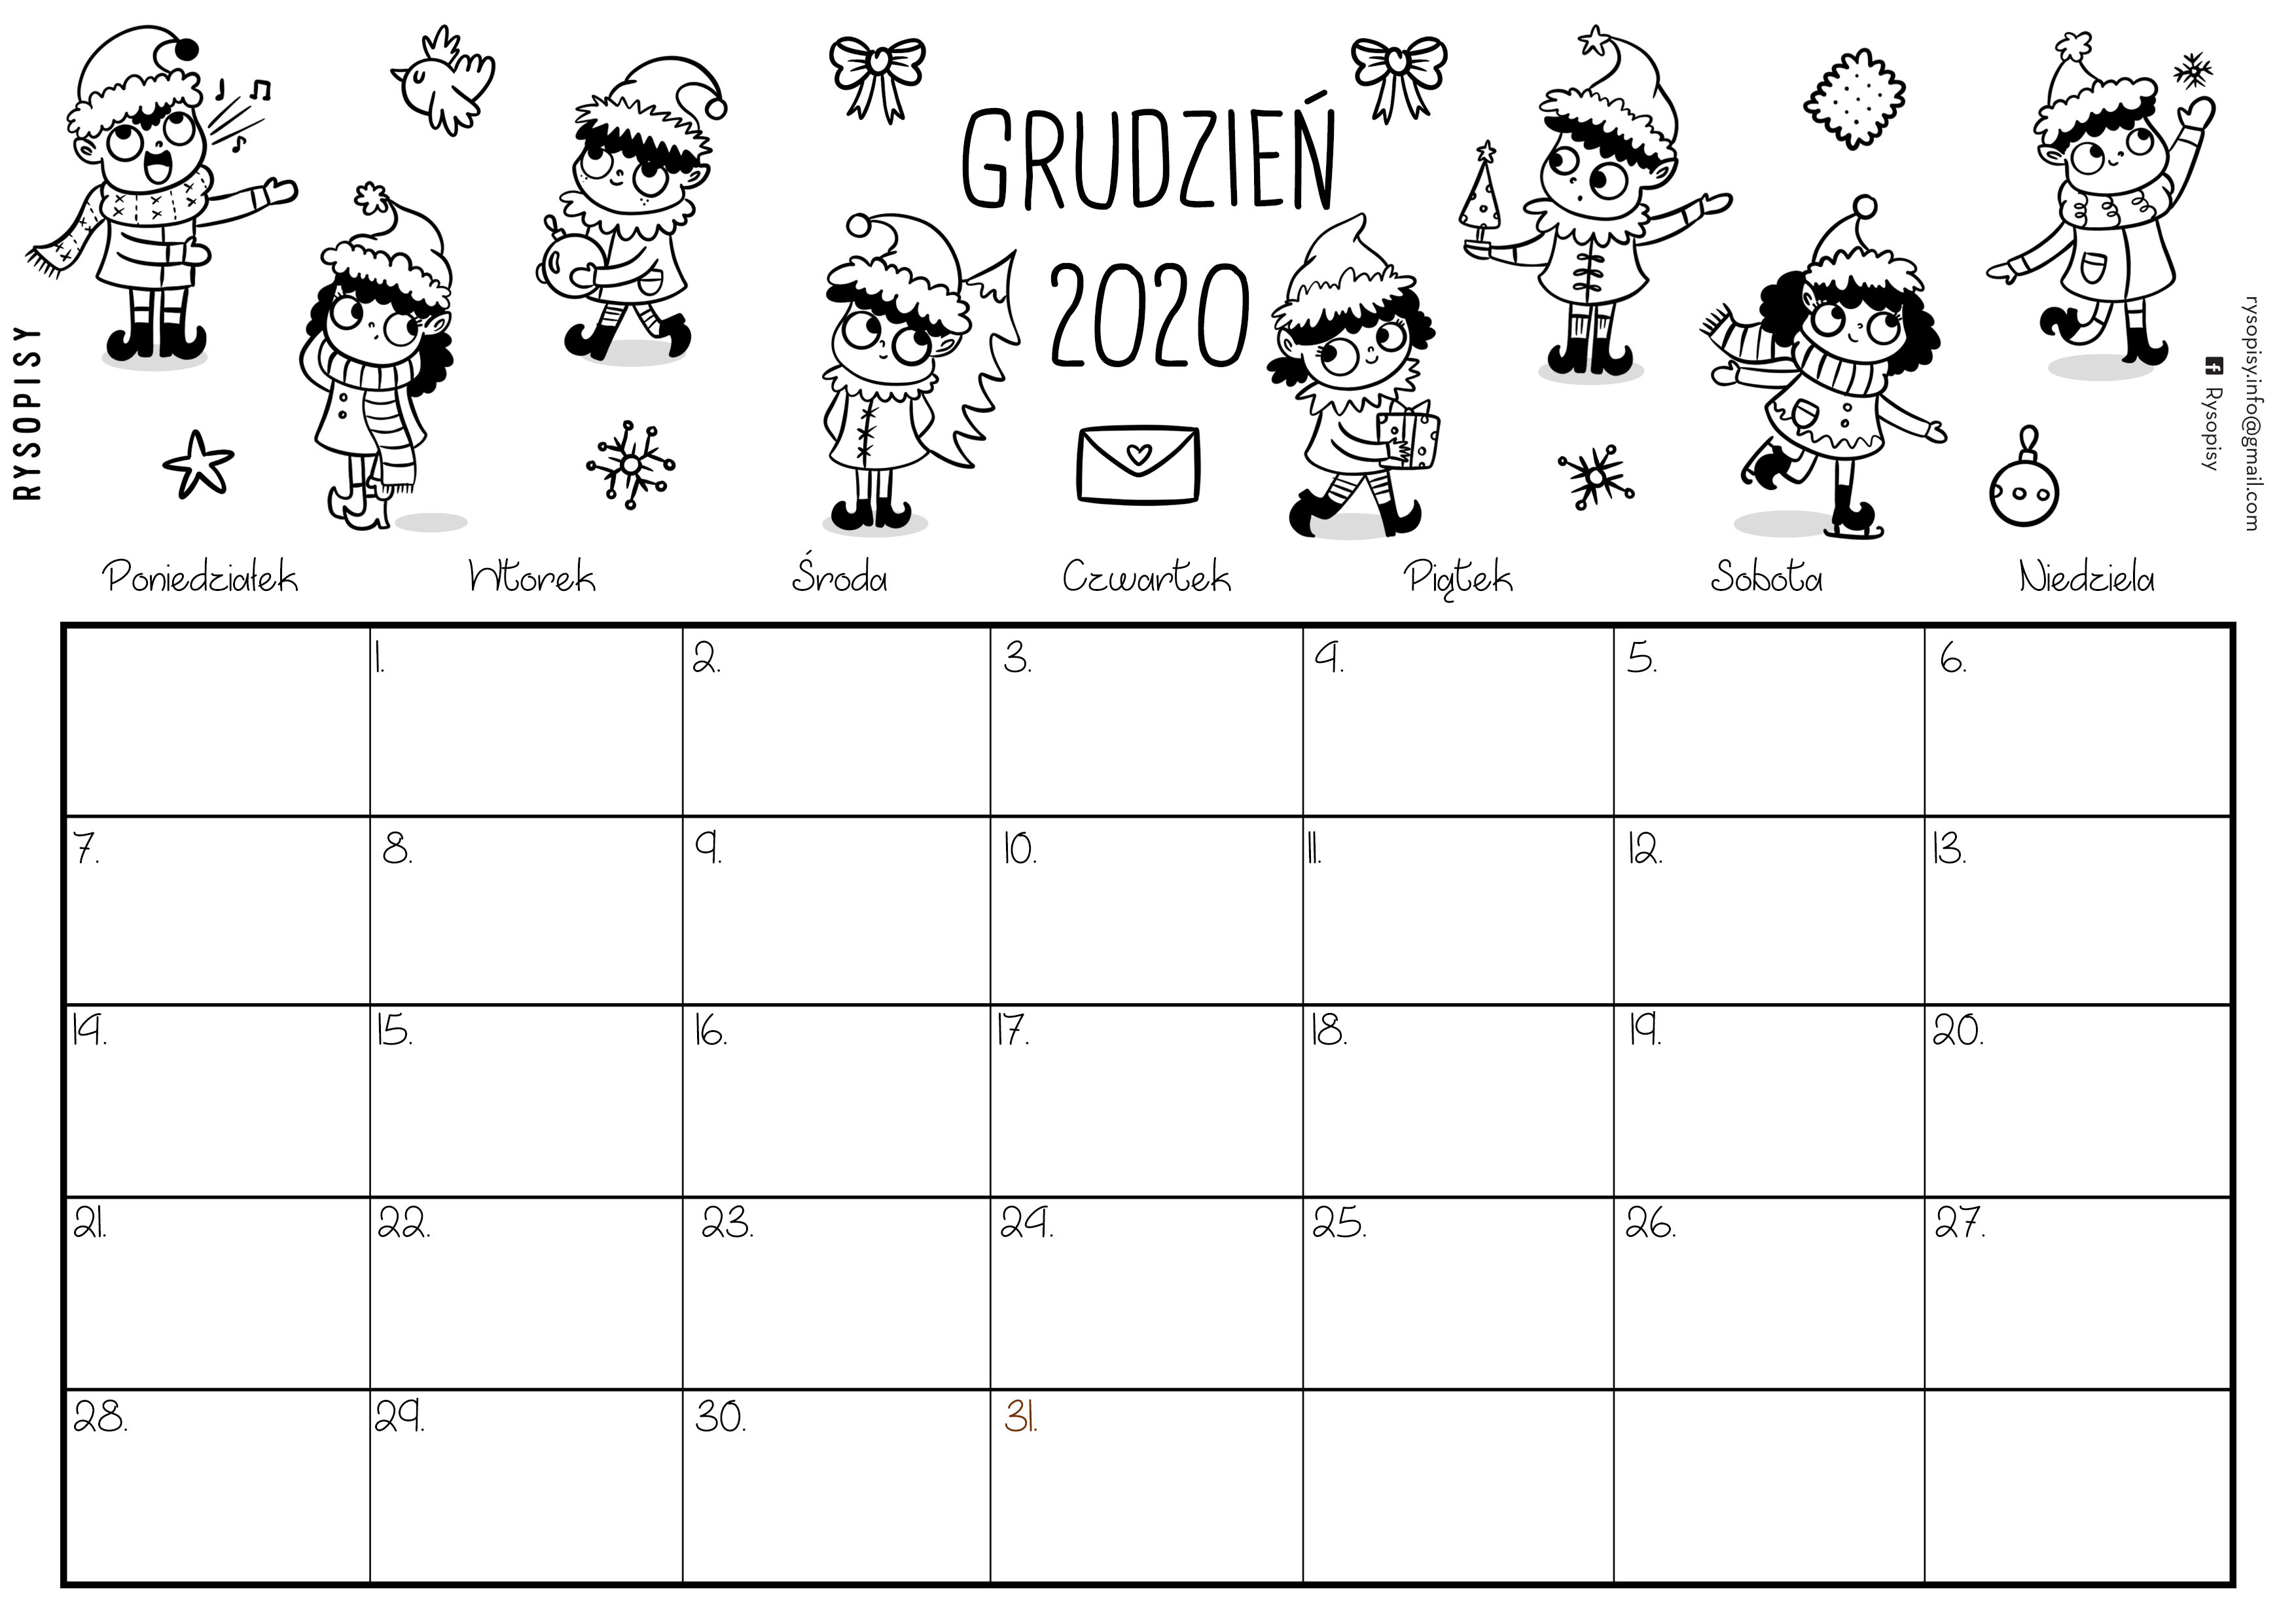 Kalendarz grudzień 2020